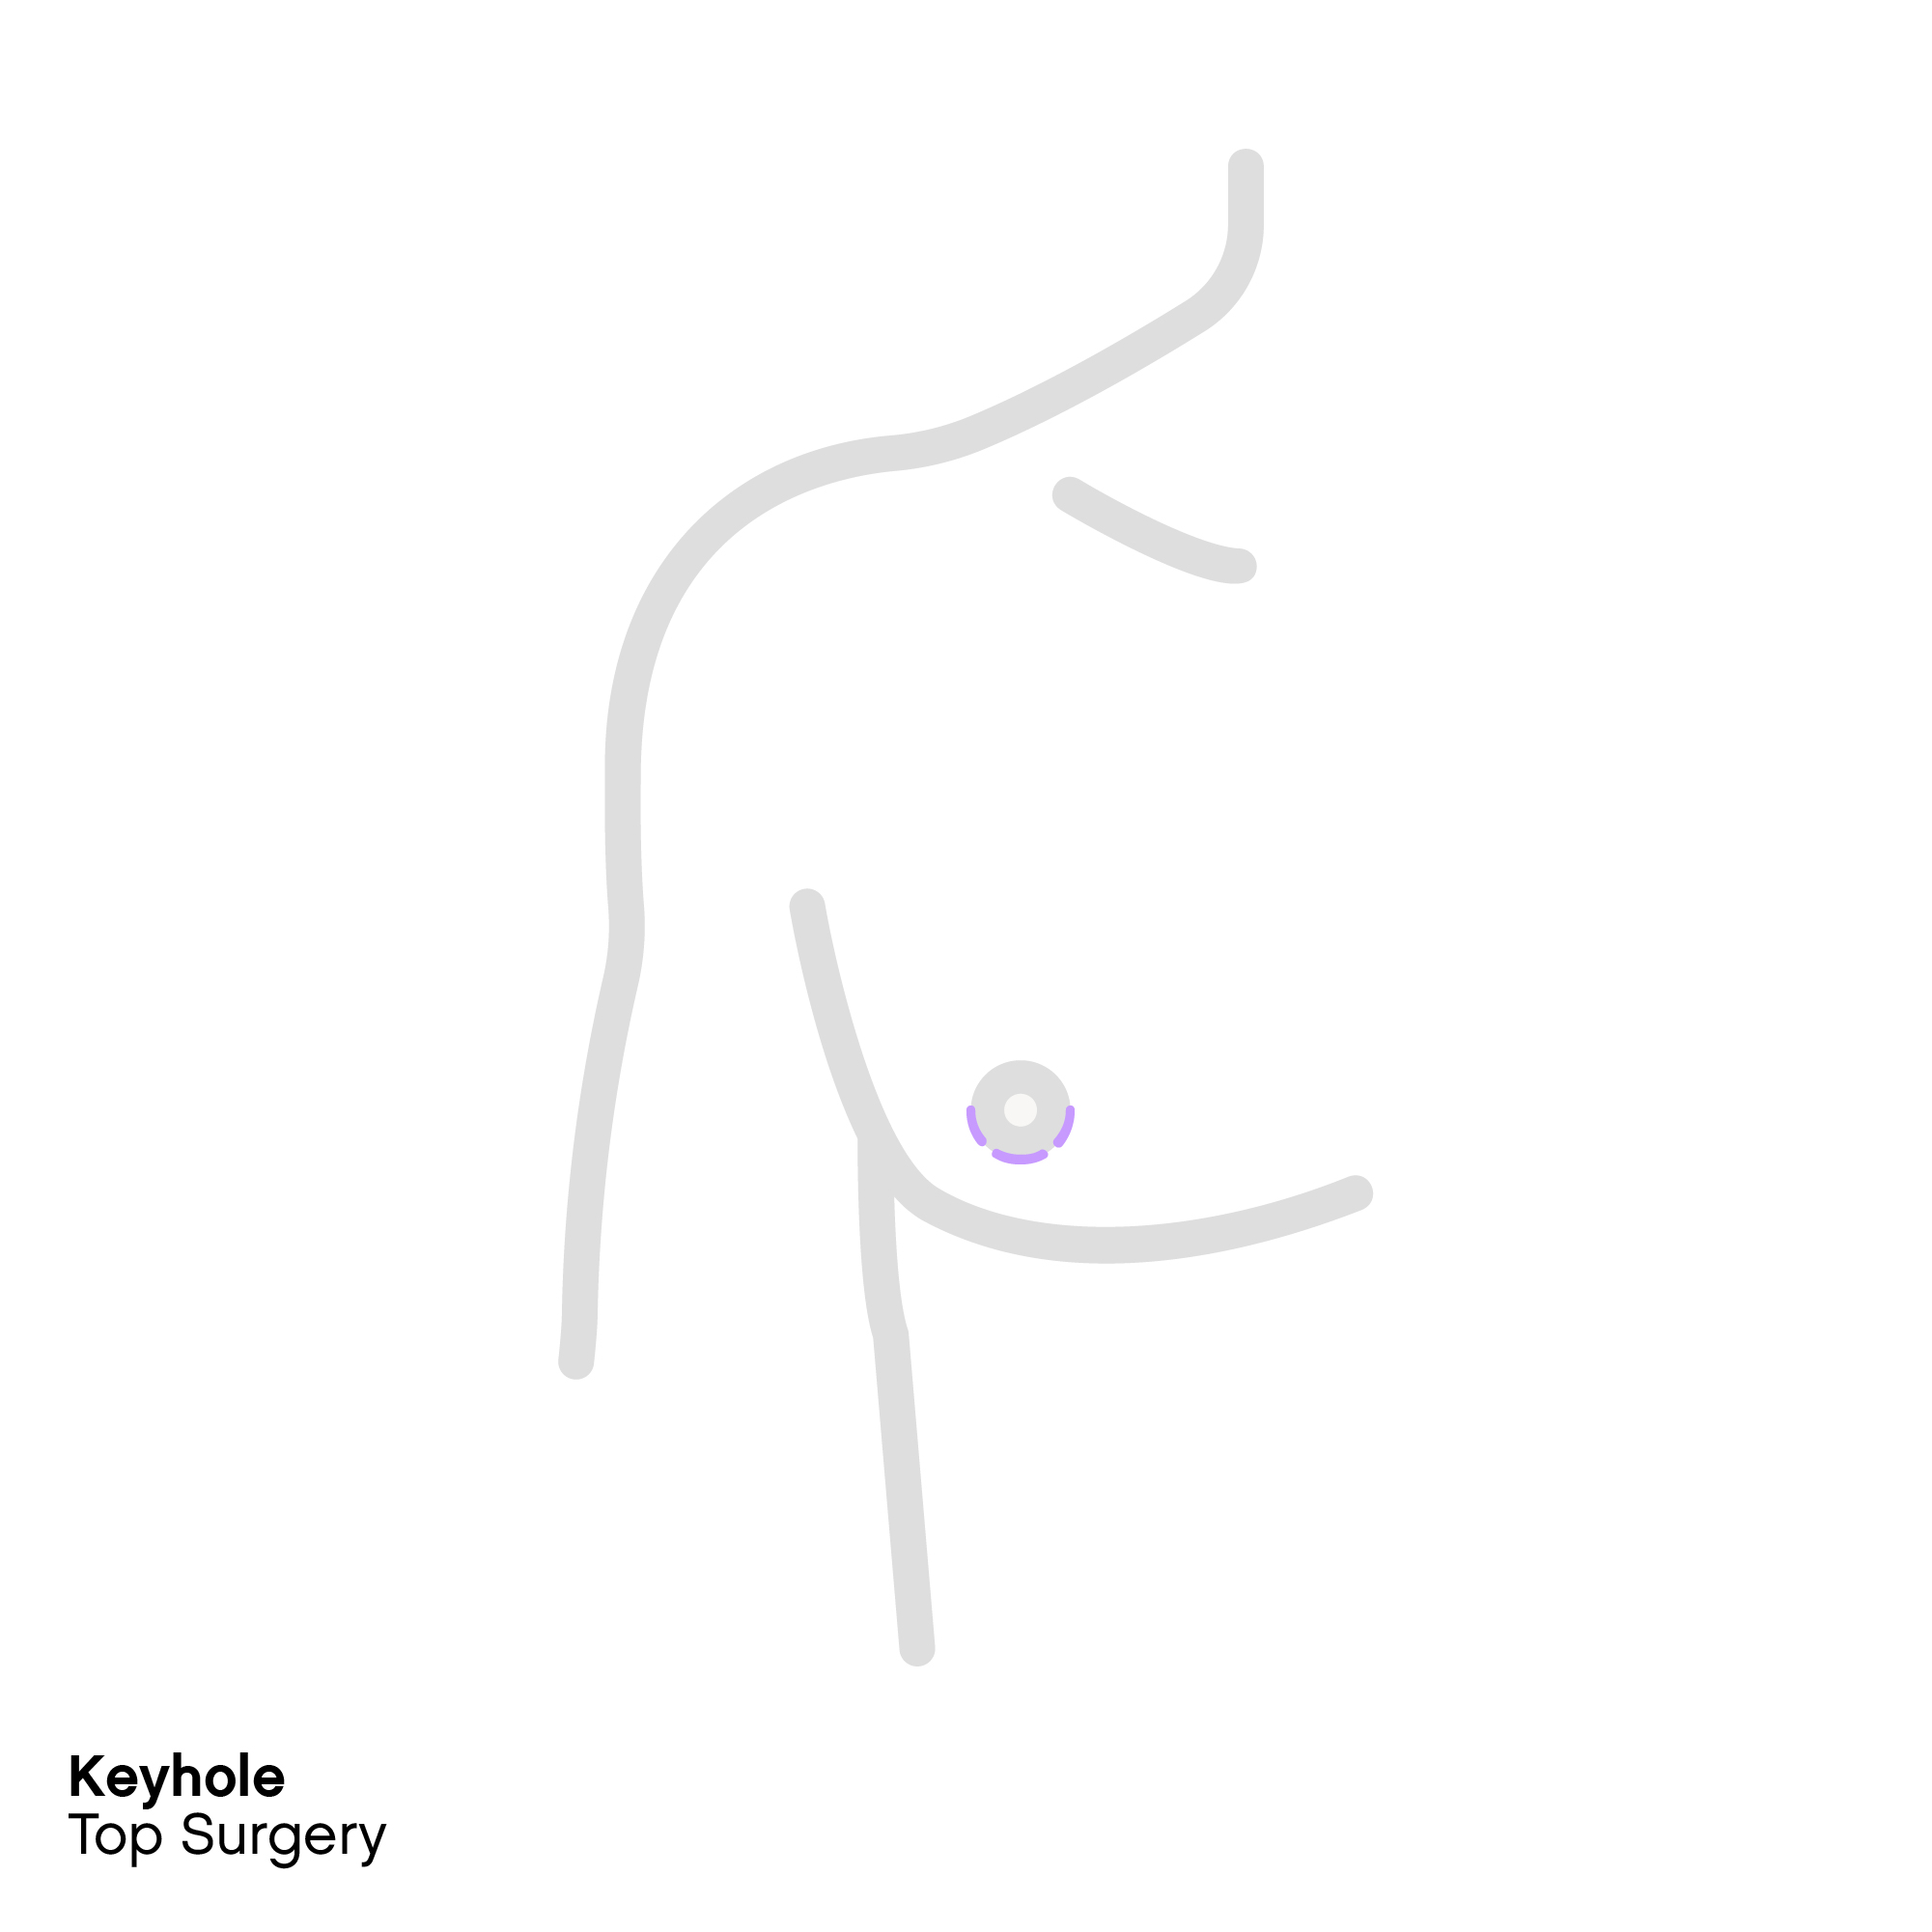 Keyhole top surgery